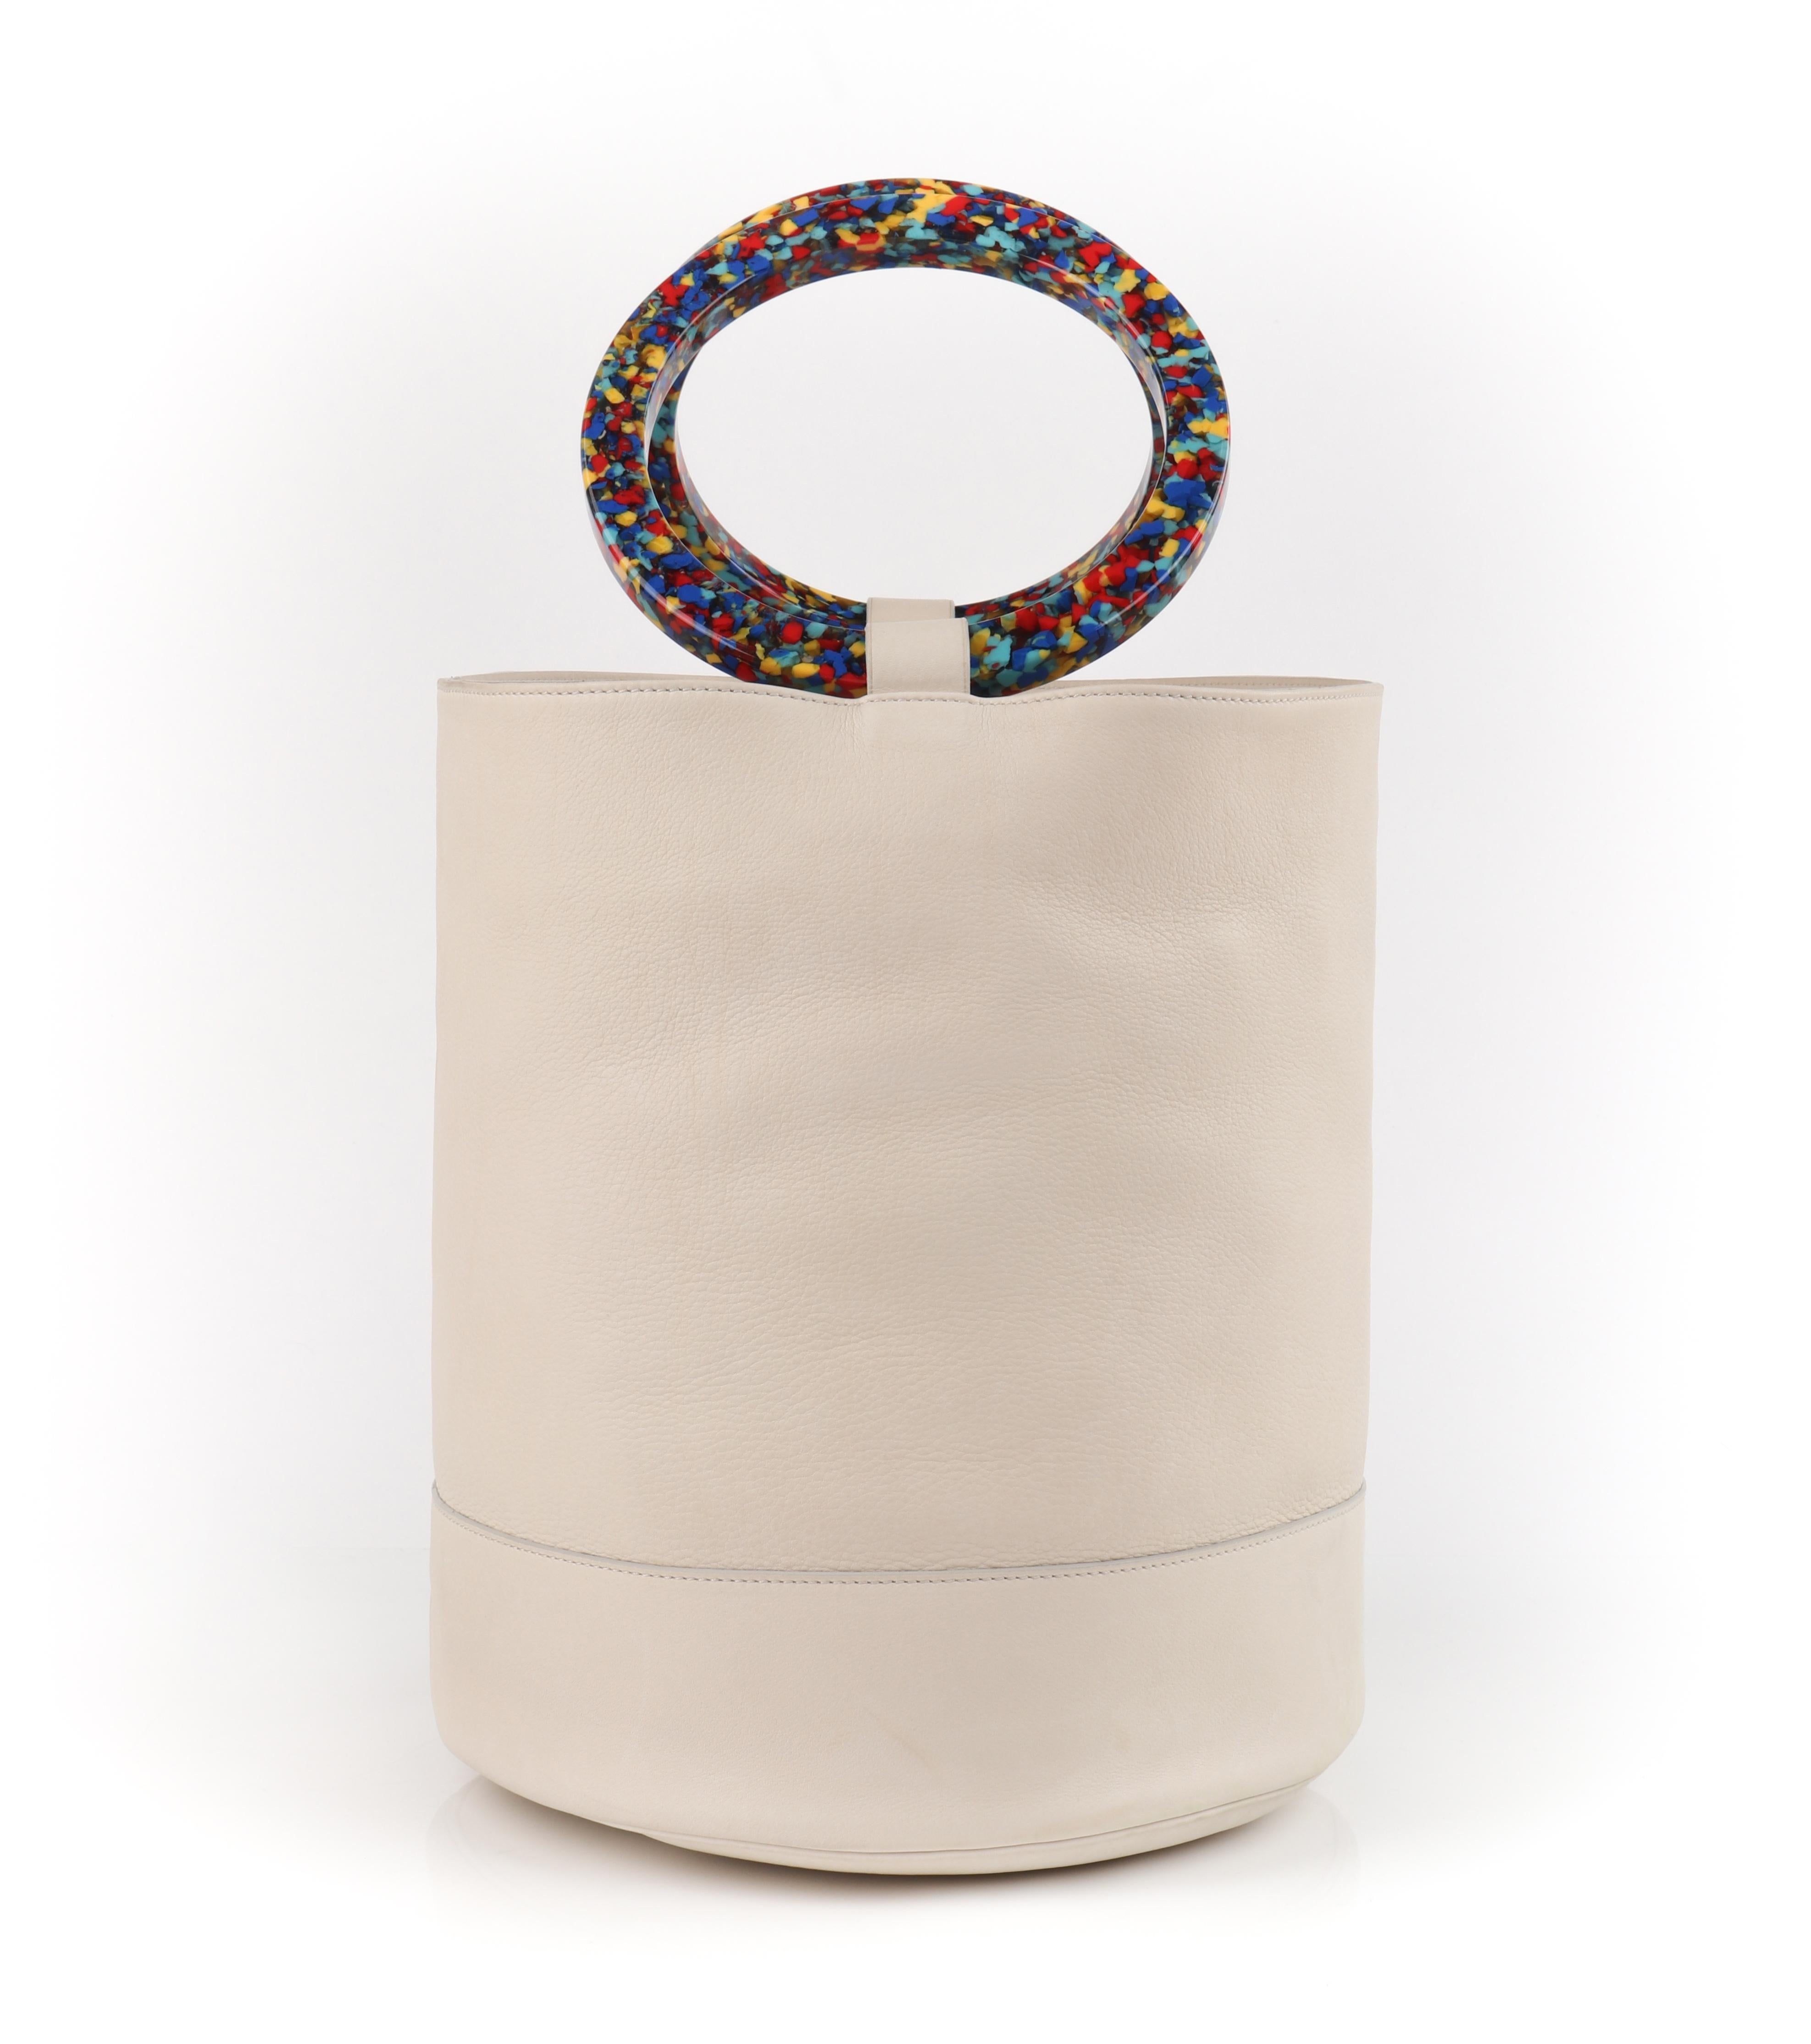 SIMON MILLER “Bonsai” 30 Off-White Multi-Color Ring Handle Nubuck Leather Bucket Handbag
 
Estimated Retail: $850
 
Brand / Manufacturer: Simon Miller
Manufacturer Style Name: Bonsai
Style: Handbag
Color(s): Shades of off-white, blue, yellow and